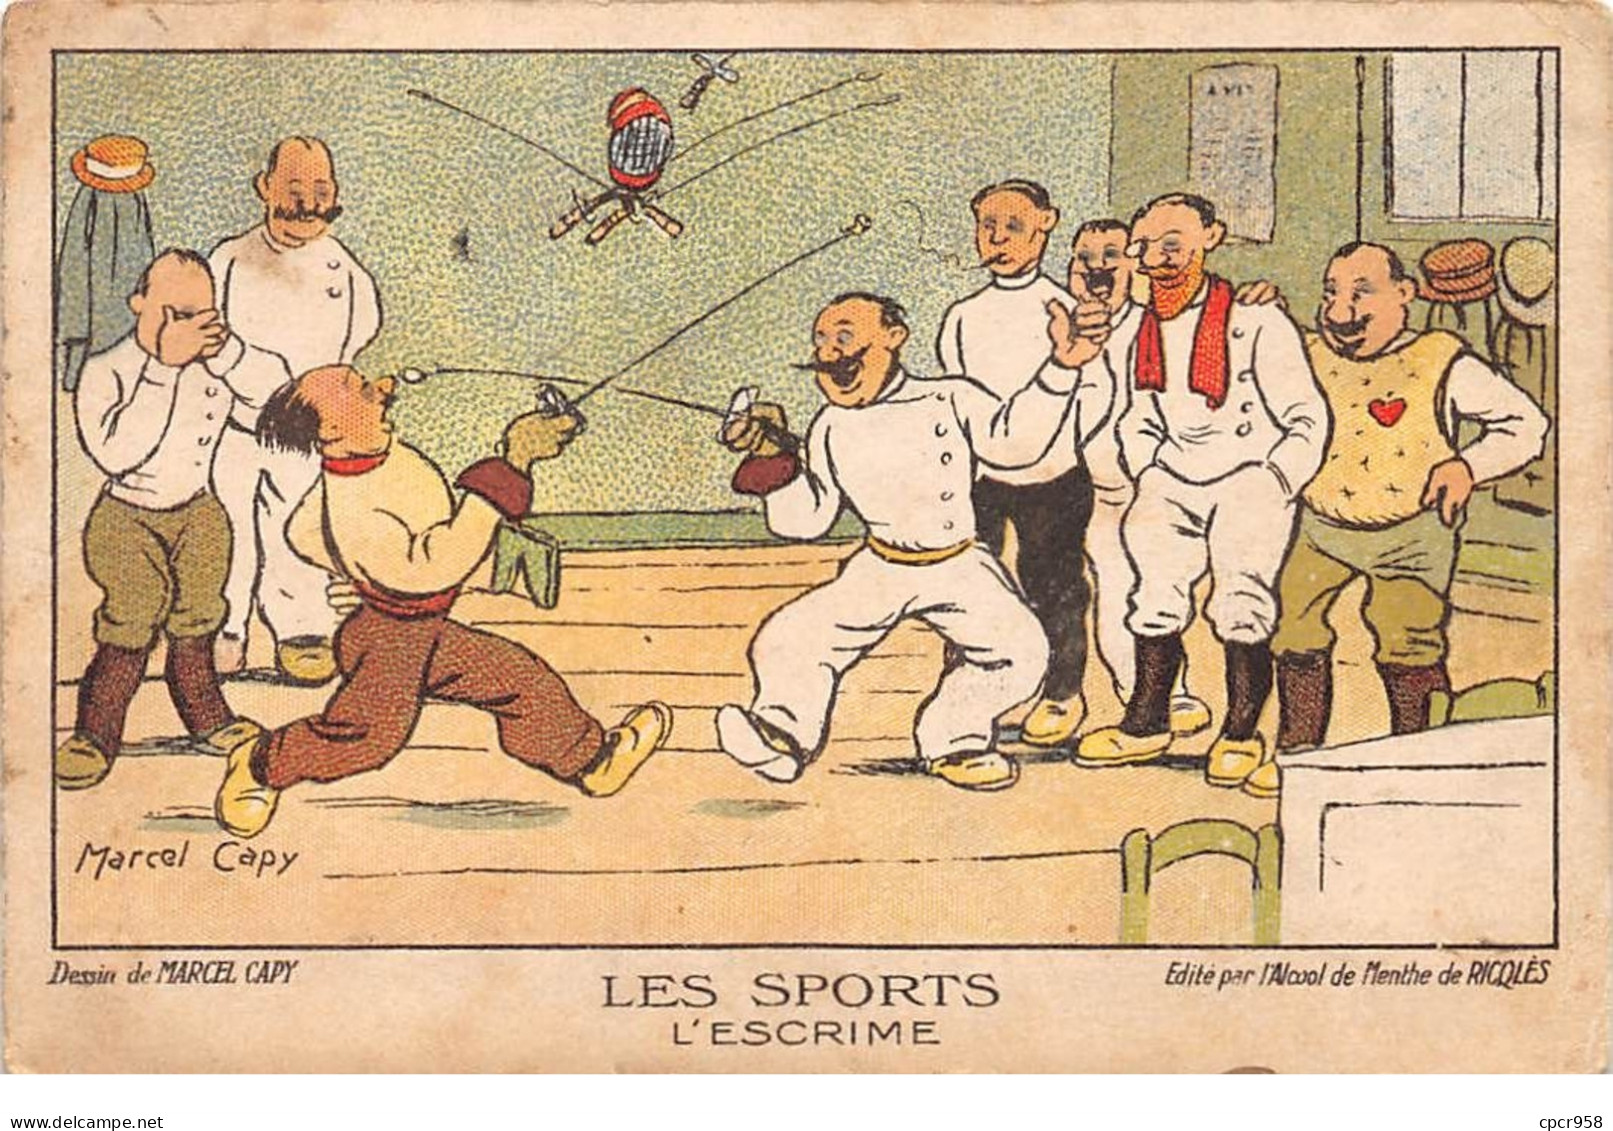 Sports - N°69102 - Escrime - Dessin De Marcel Capy - Alcool De Menthe De Ricqlès - Carte Publicitaire - Escrime